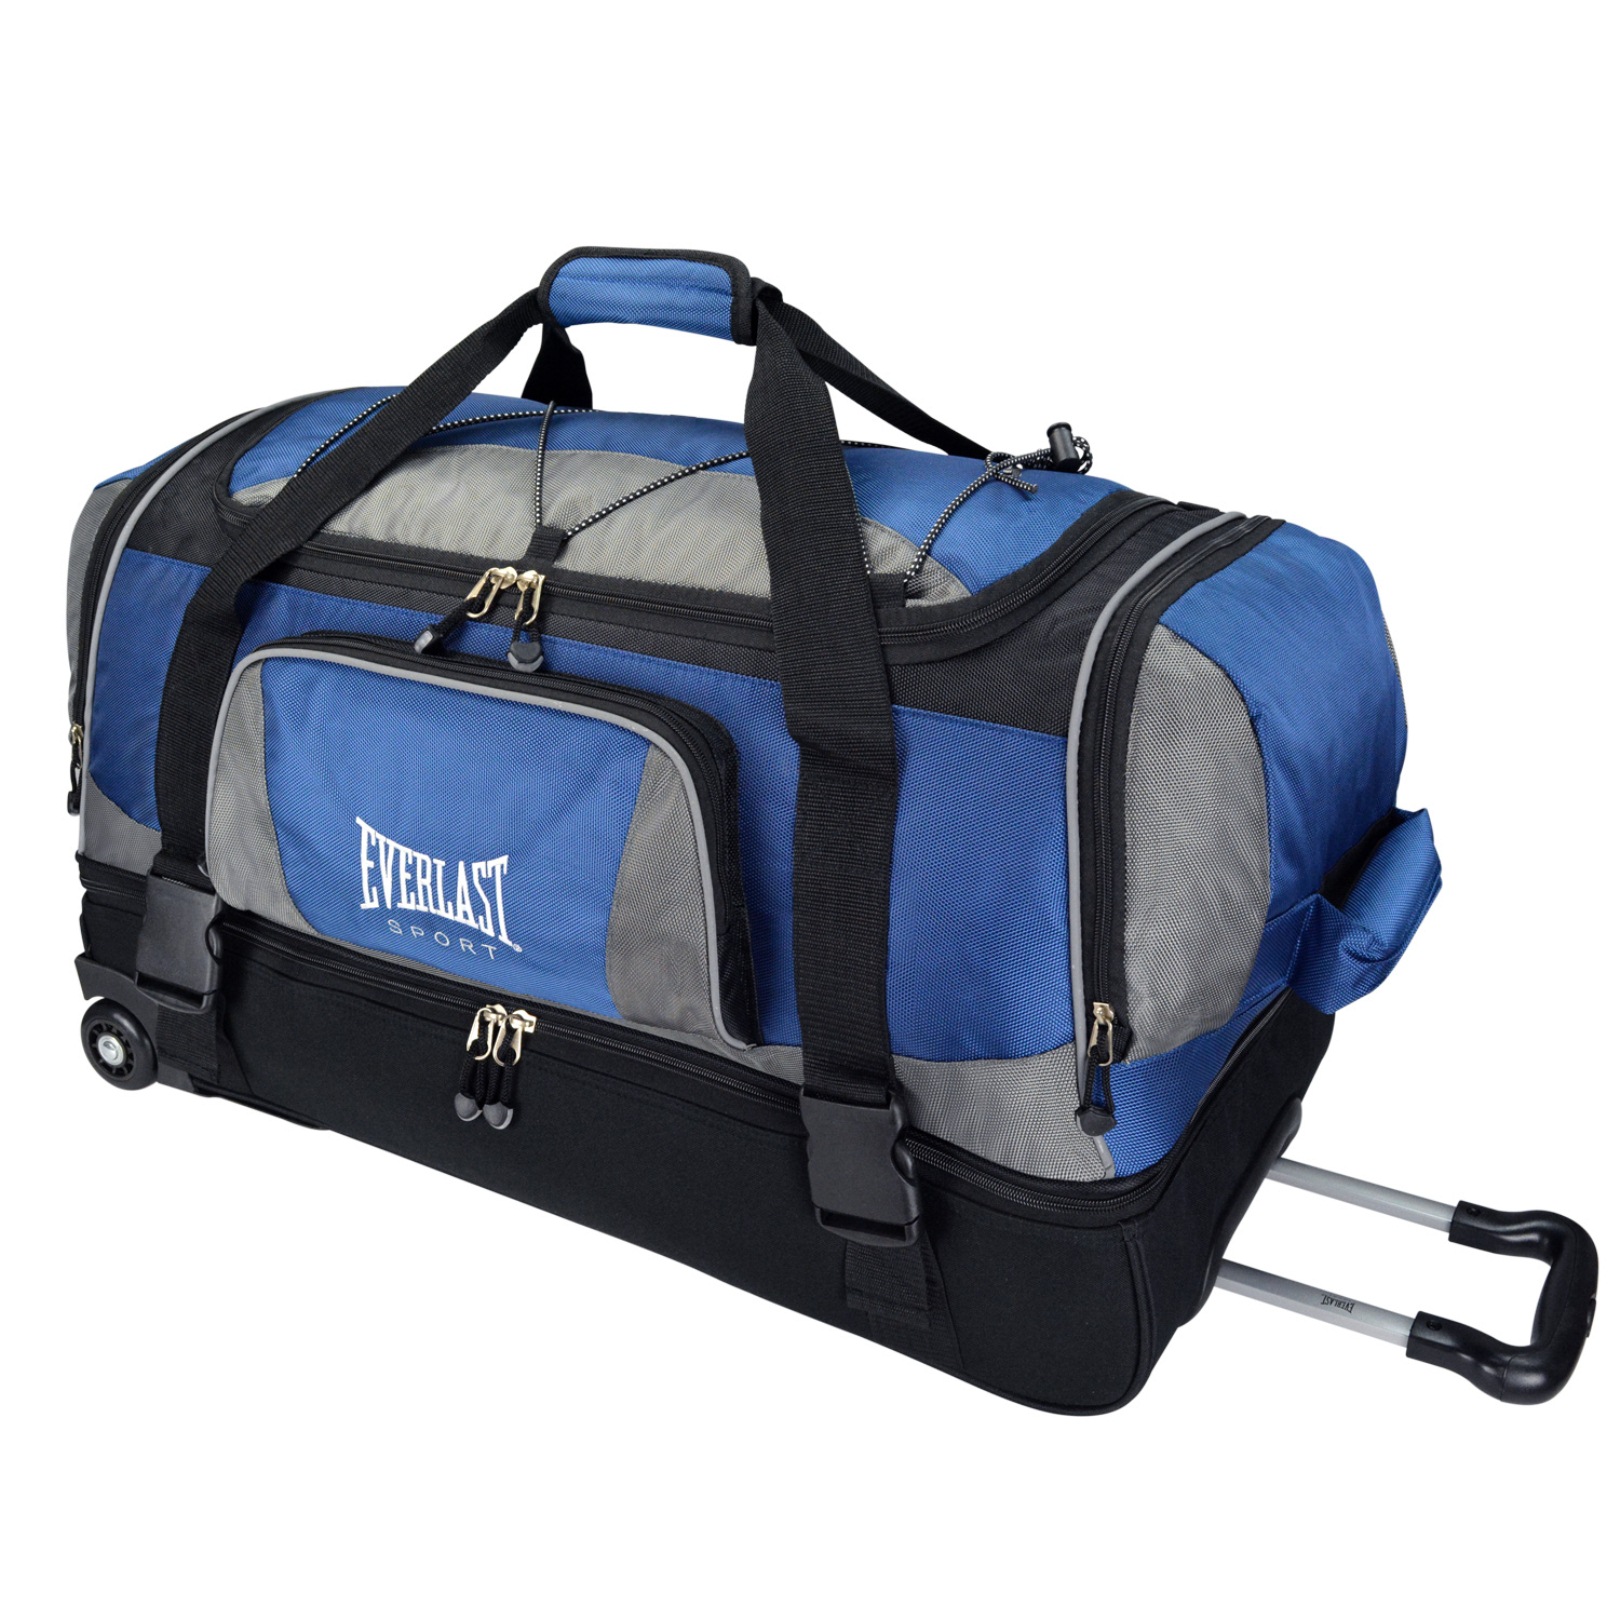 30 Inch Wheeled Duffel Bag Rolling Gym Large With Wheels Travel Luggage Handle | eBay